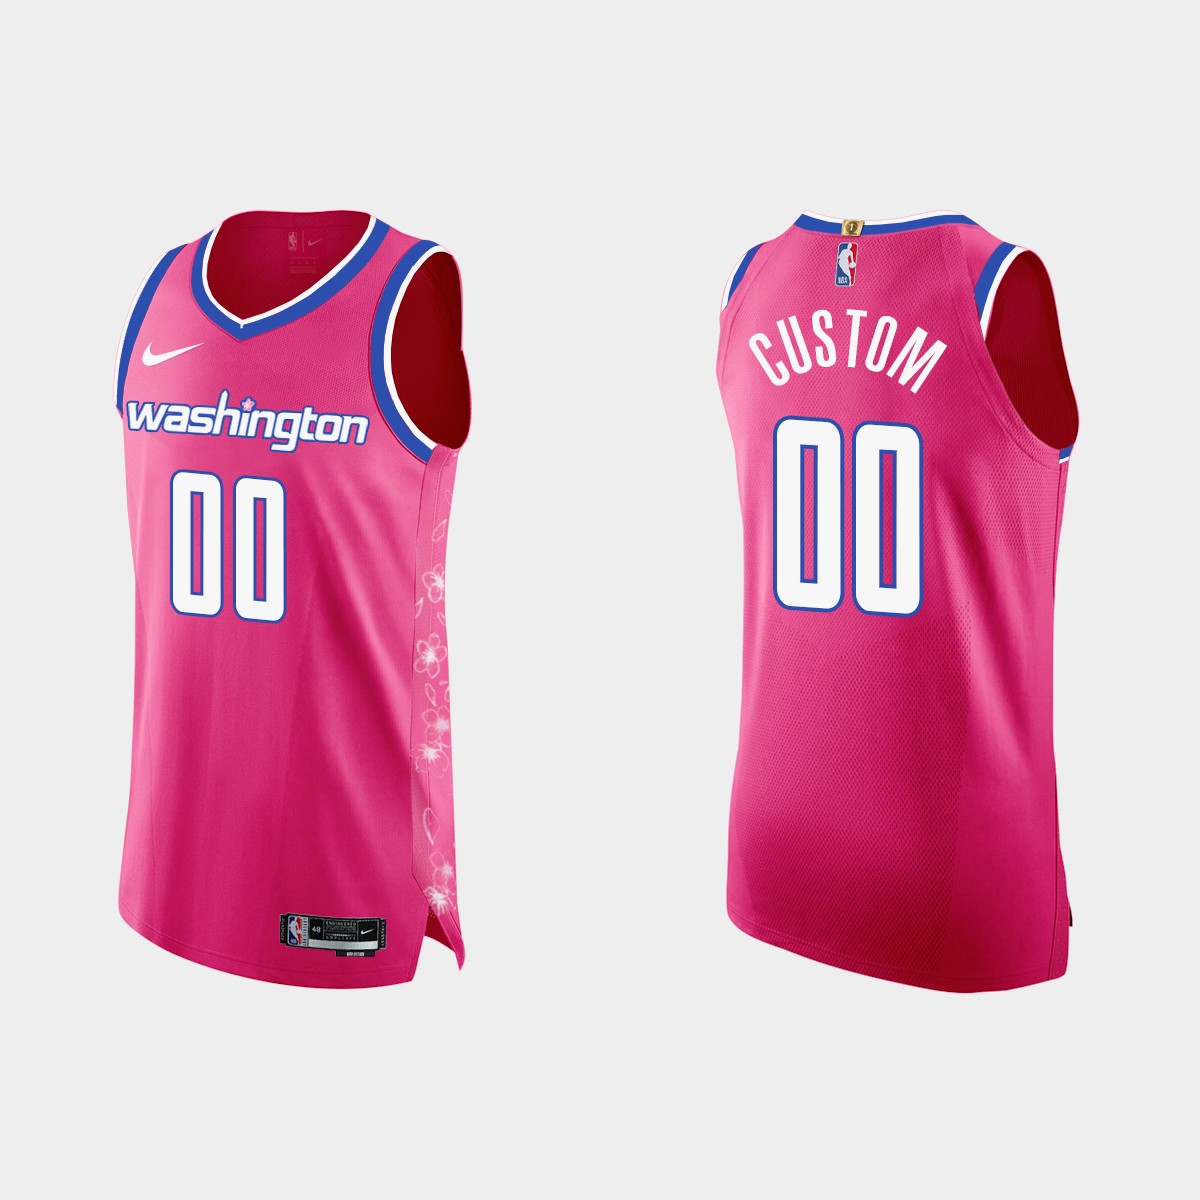 wizards pink jersey design